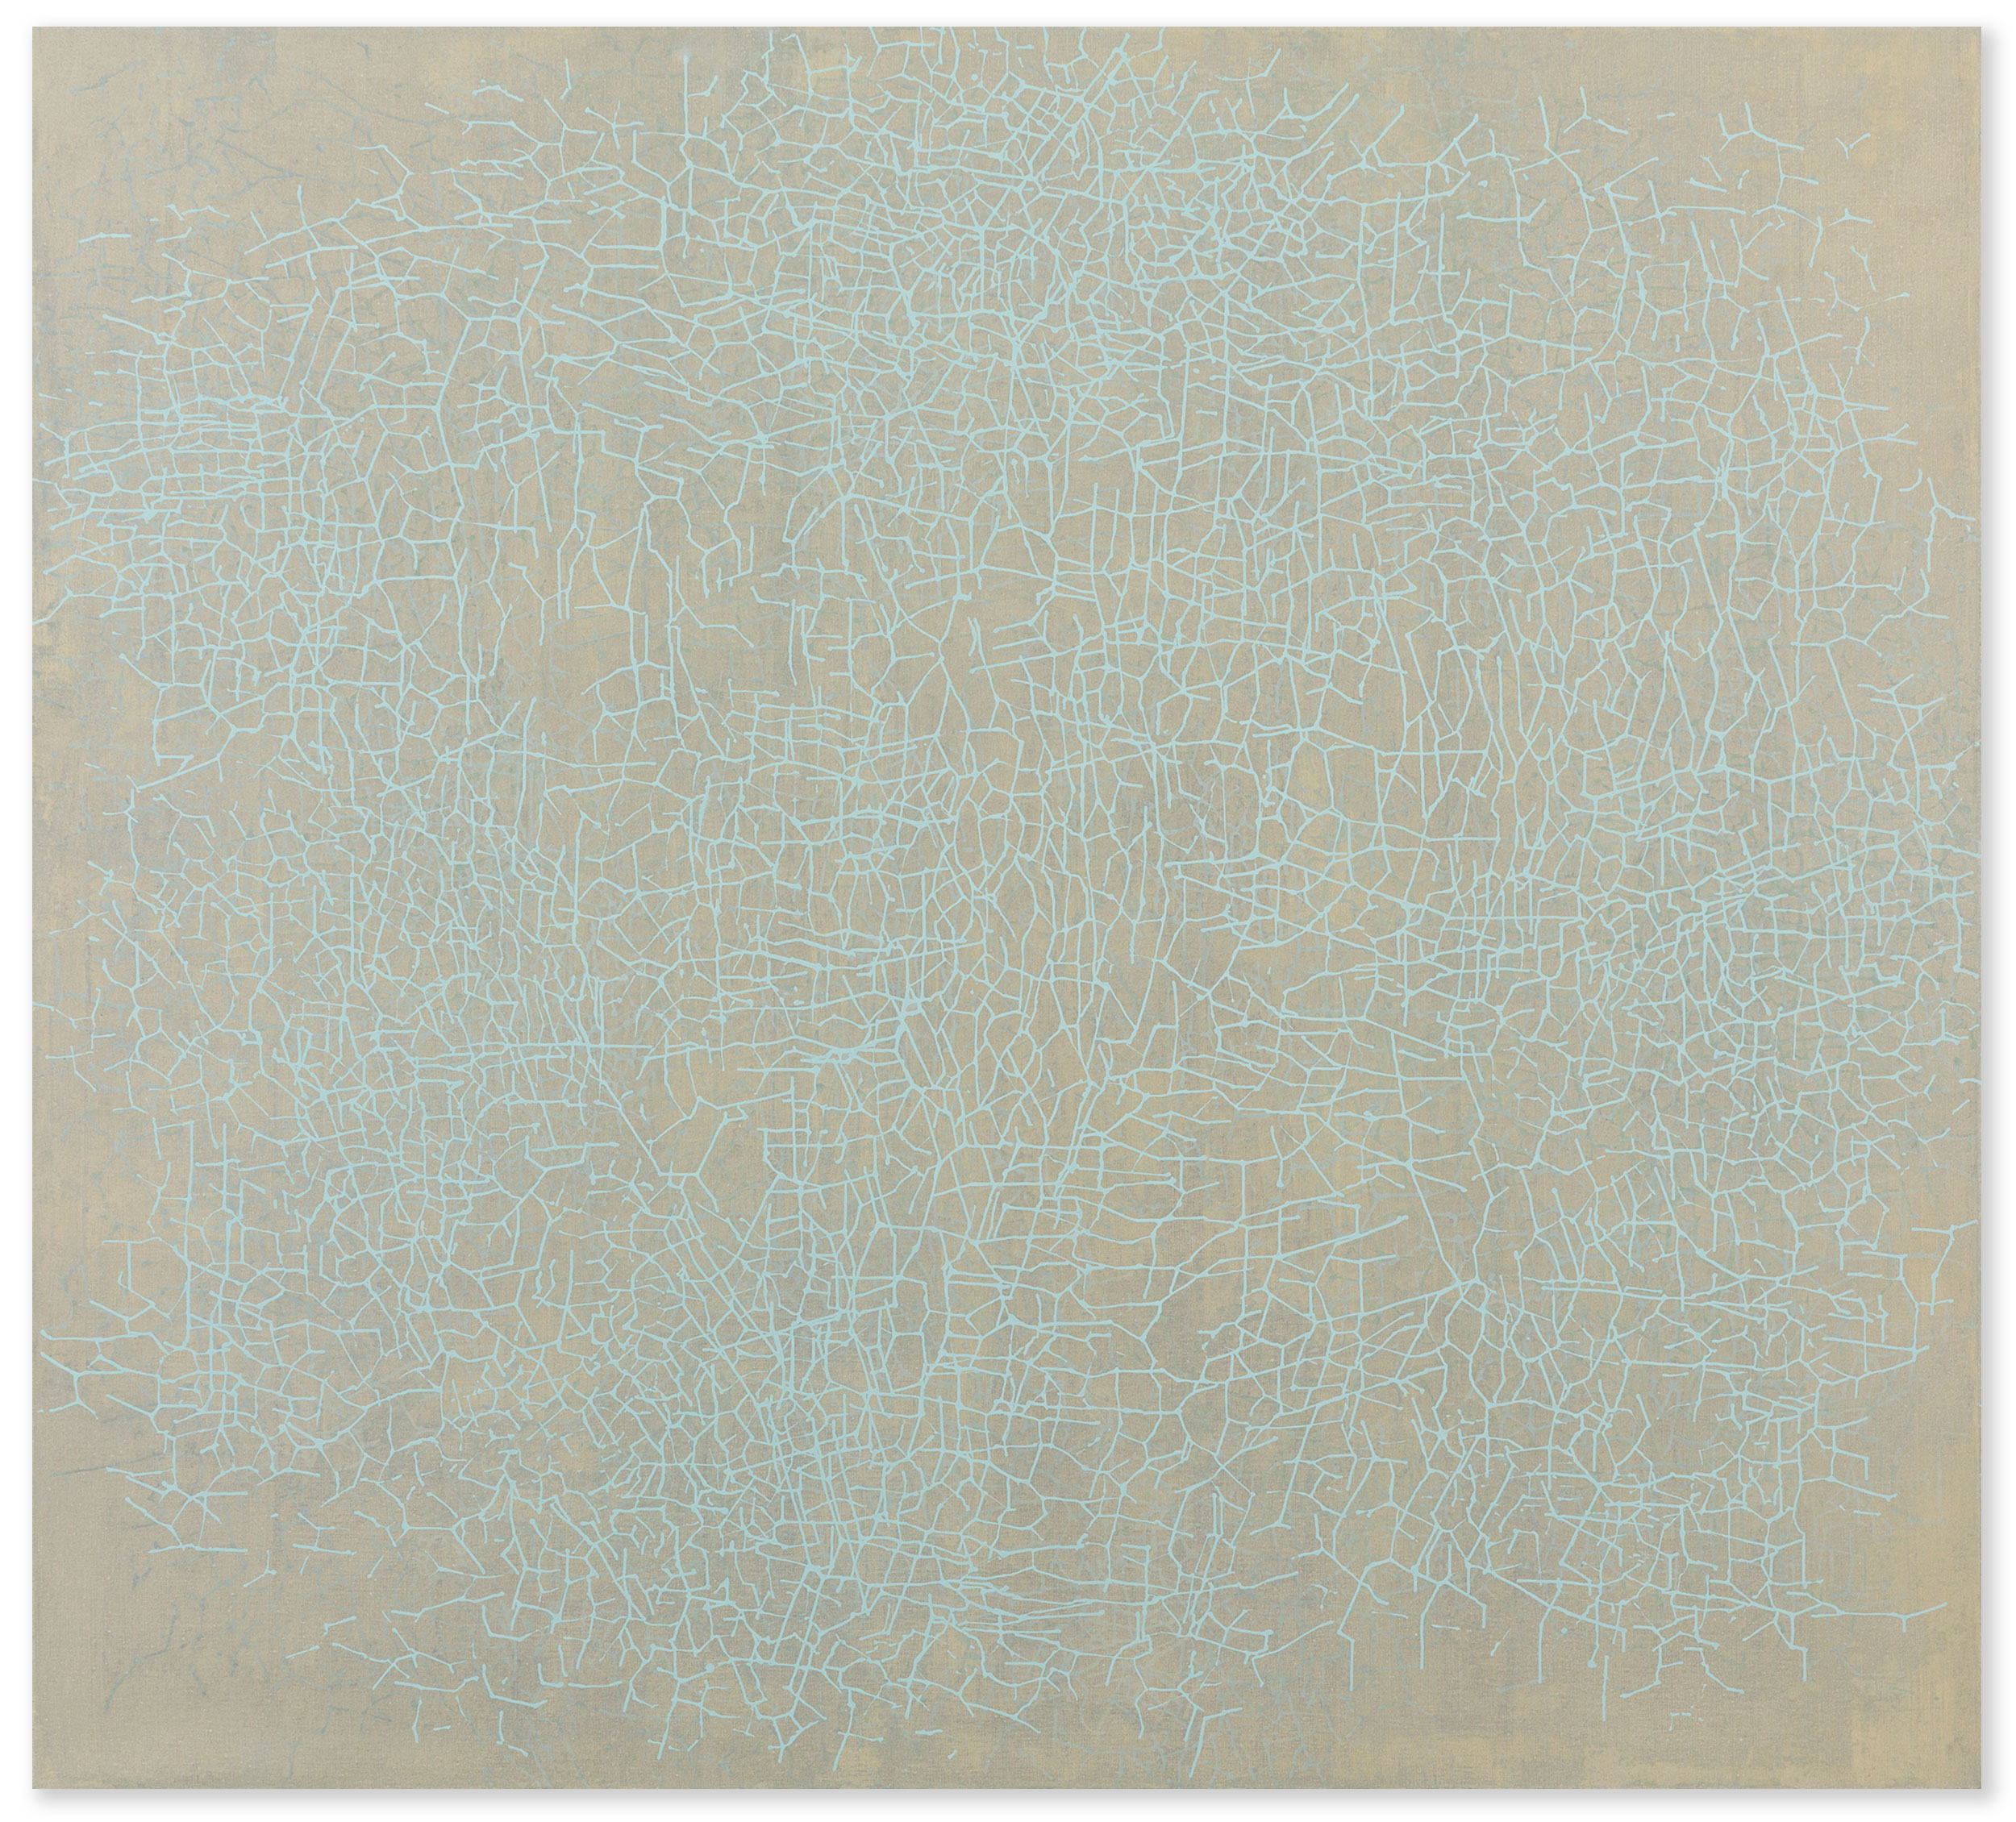 DW K09 / 2015 · egg tempera on canvas · 180 x 200 cm